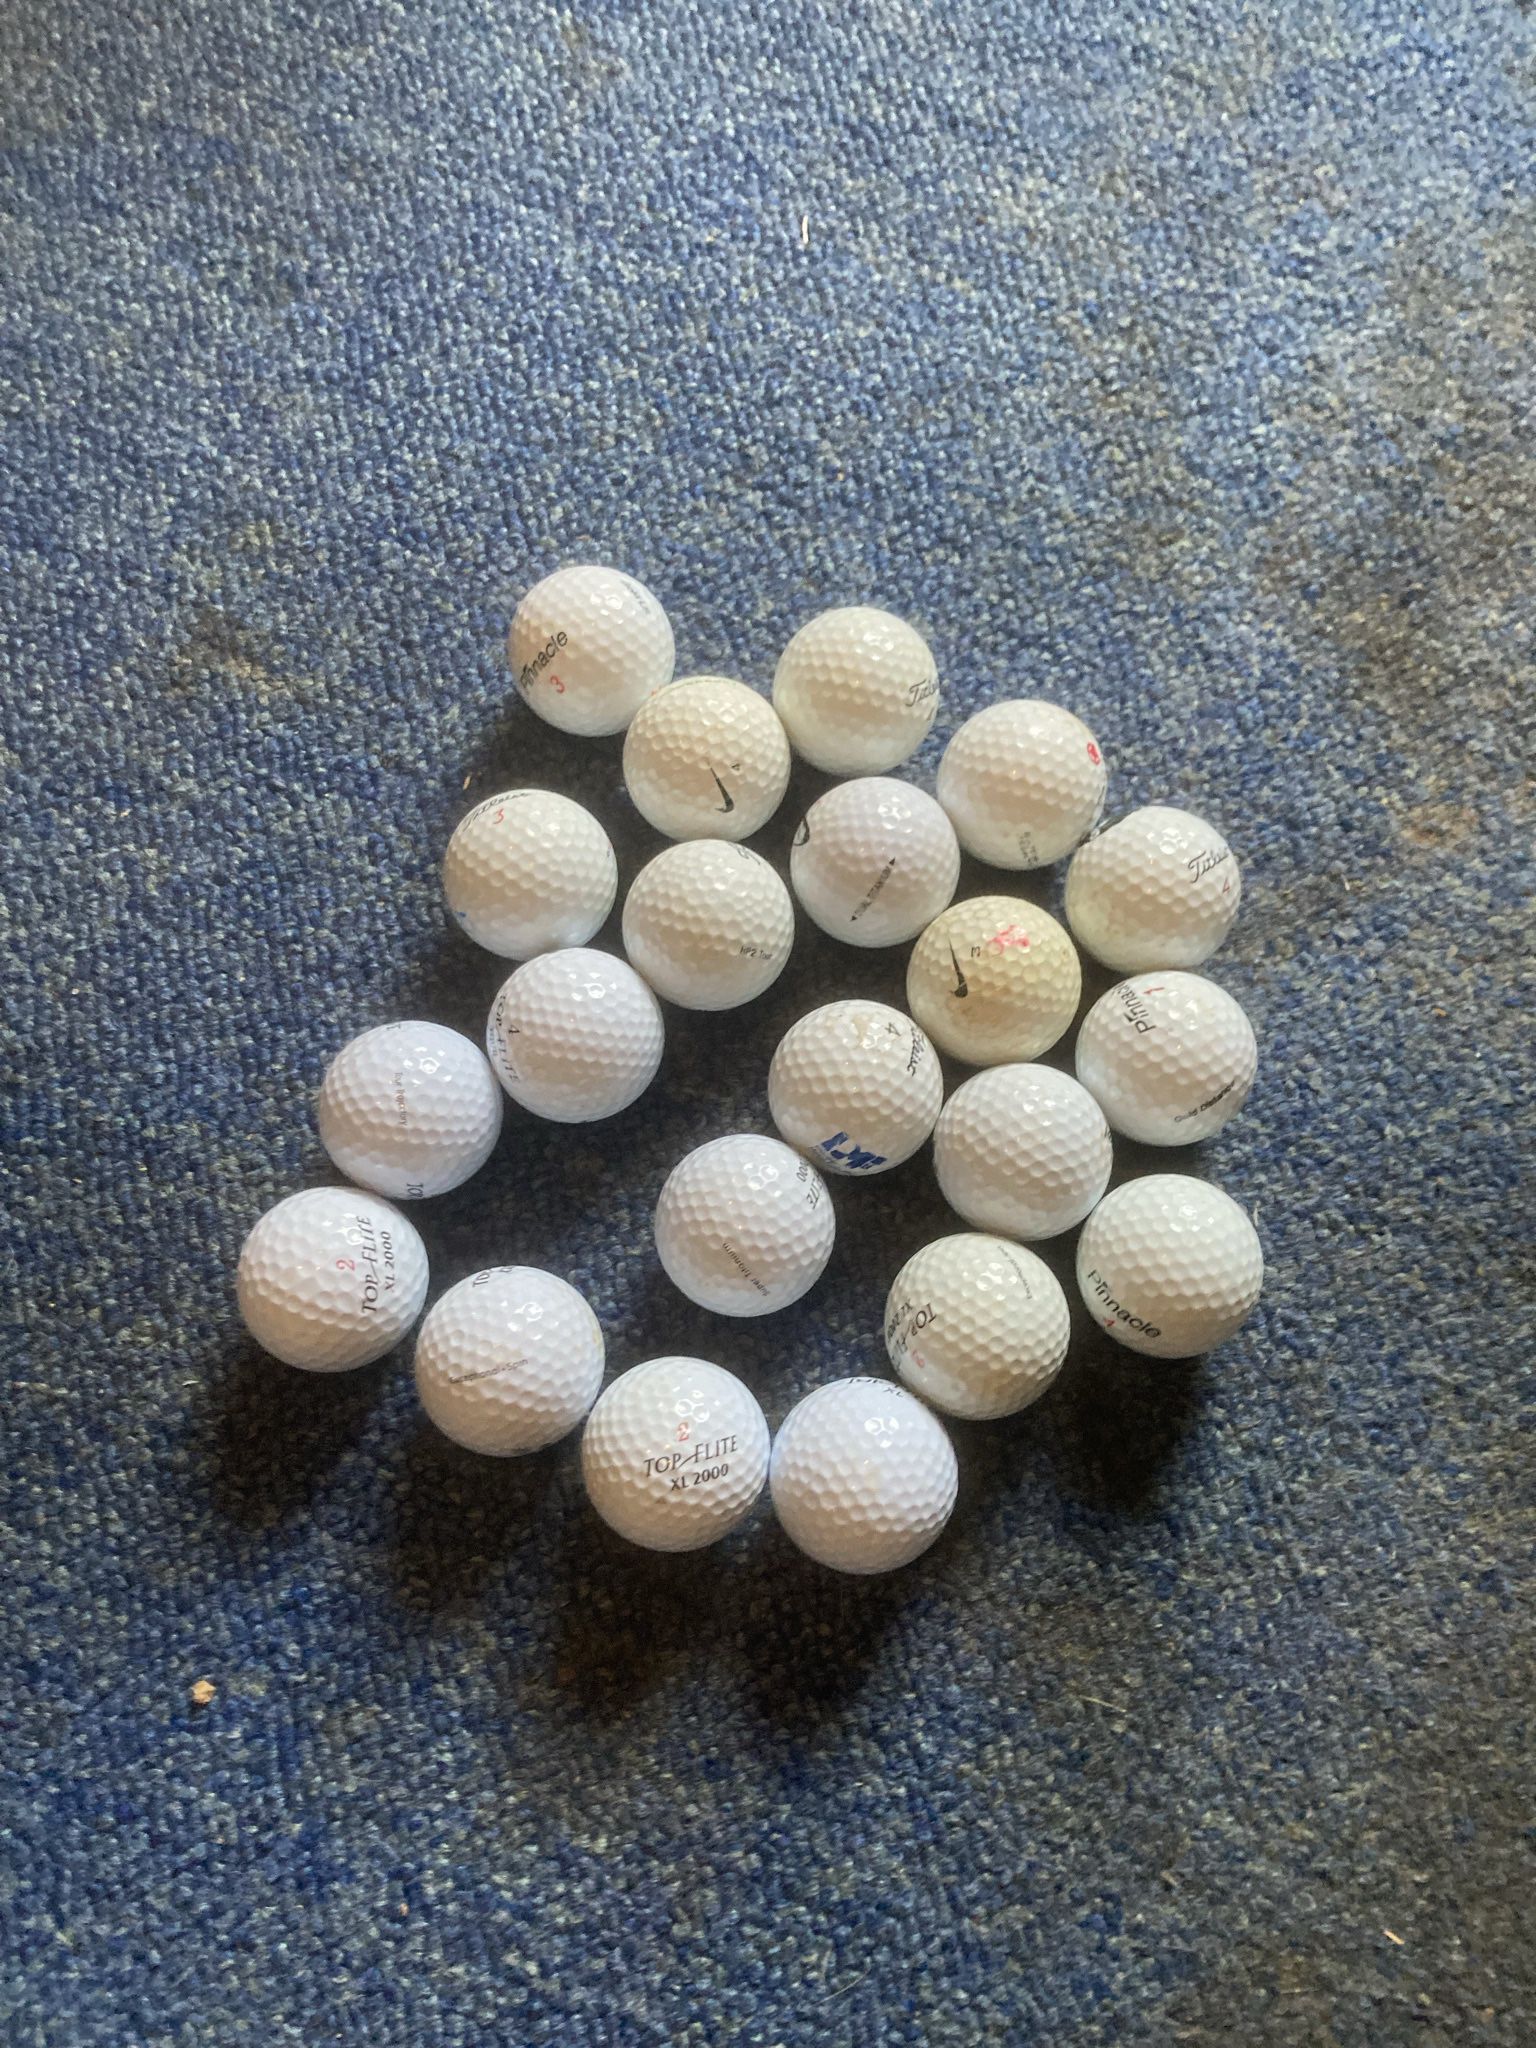 20 Assorted Used Golf Balls